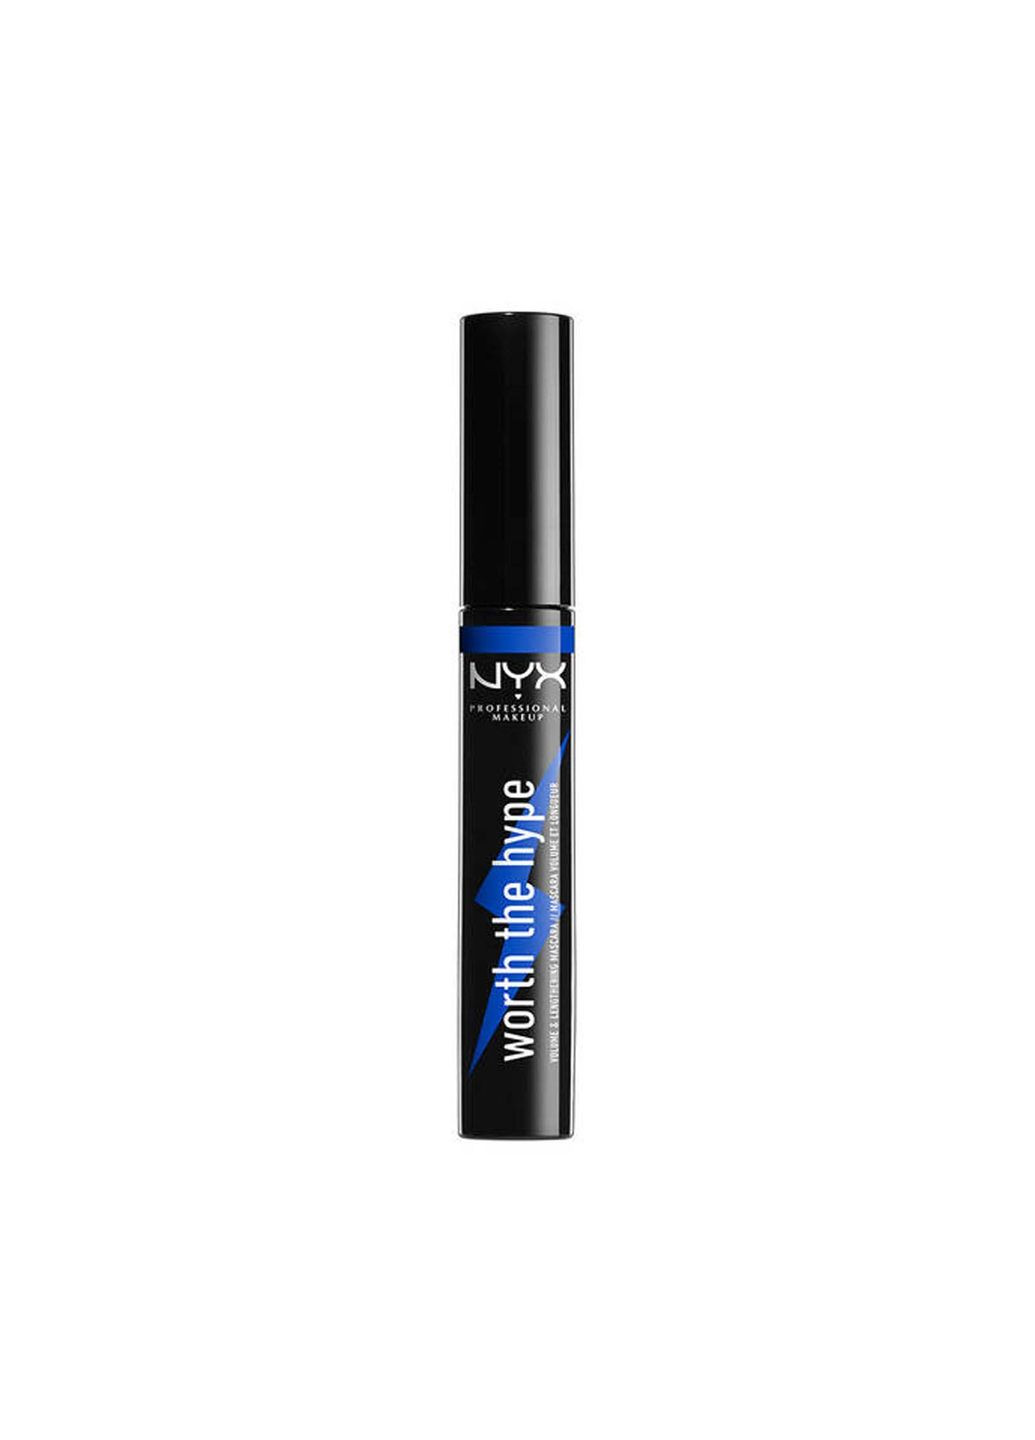 Кольорова туш для вій Worth the Hype Volumizing & Lengthening Mascara (7 мл та 5.25 мл) 03 Blue (WTHM03) NYX Professional Makeup (293153757)